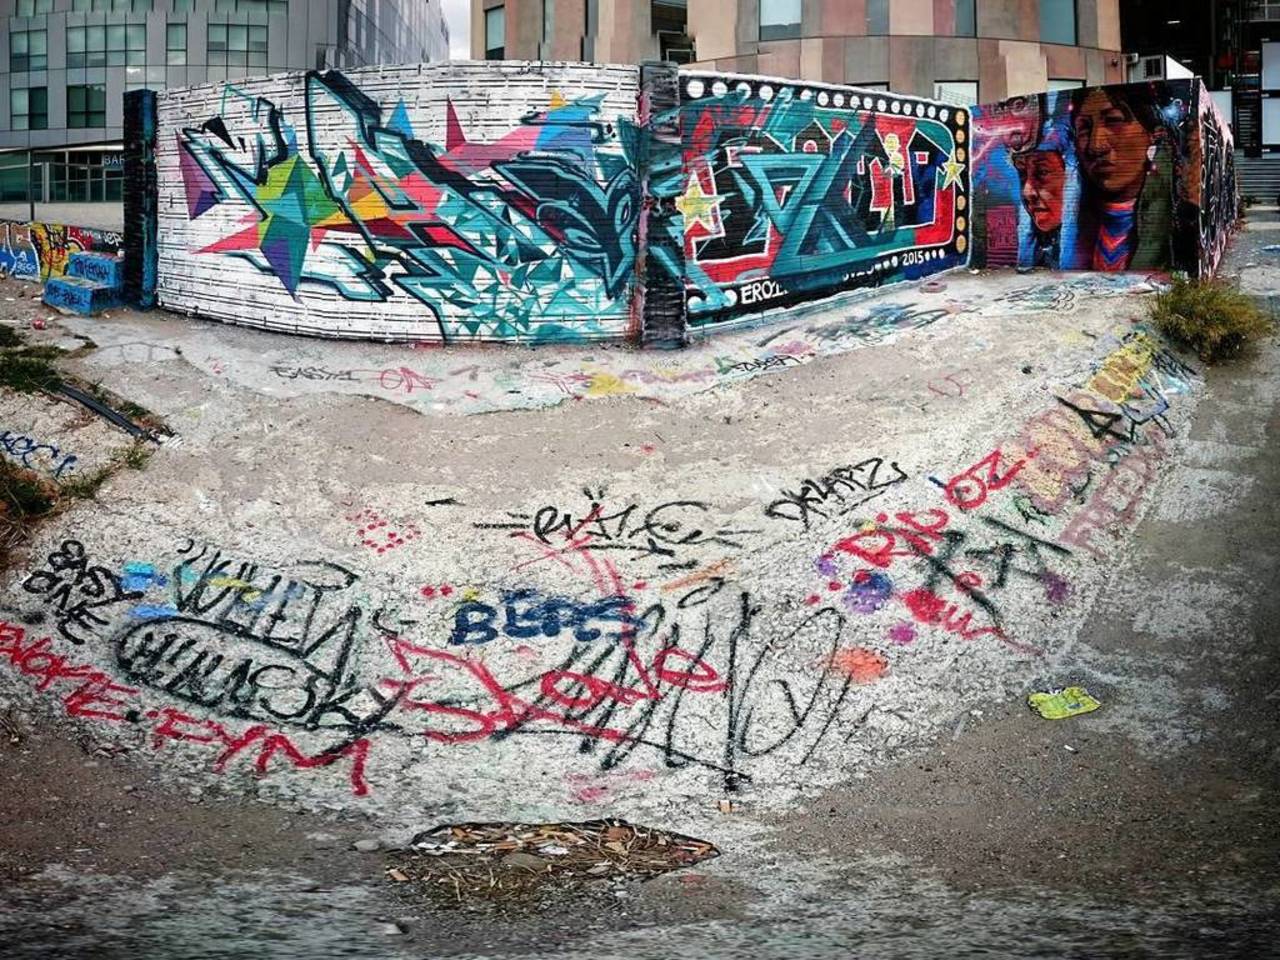 Cosas #Barcelona #streetart #graffiti #lovebarcelona #barcelonainspira #wall #art #urban #… http://ift.tt/1PKRayo http://t.co/PWaCwTiXCG